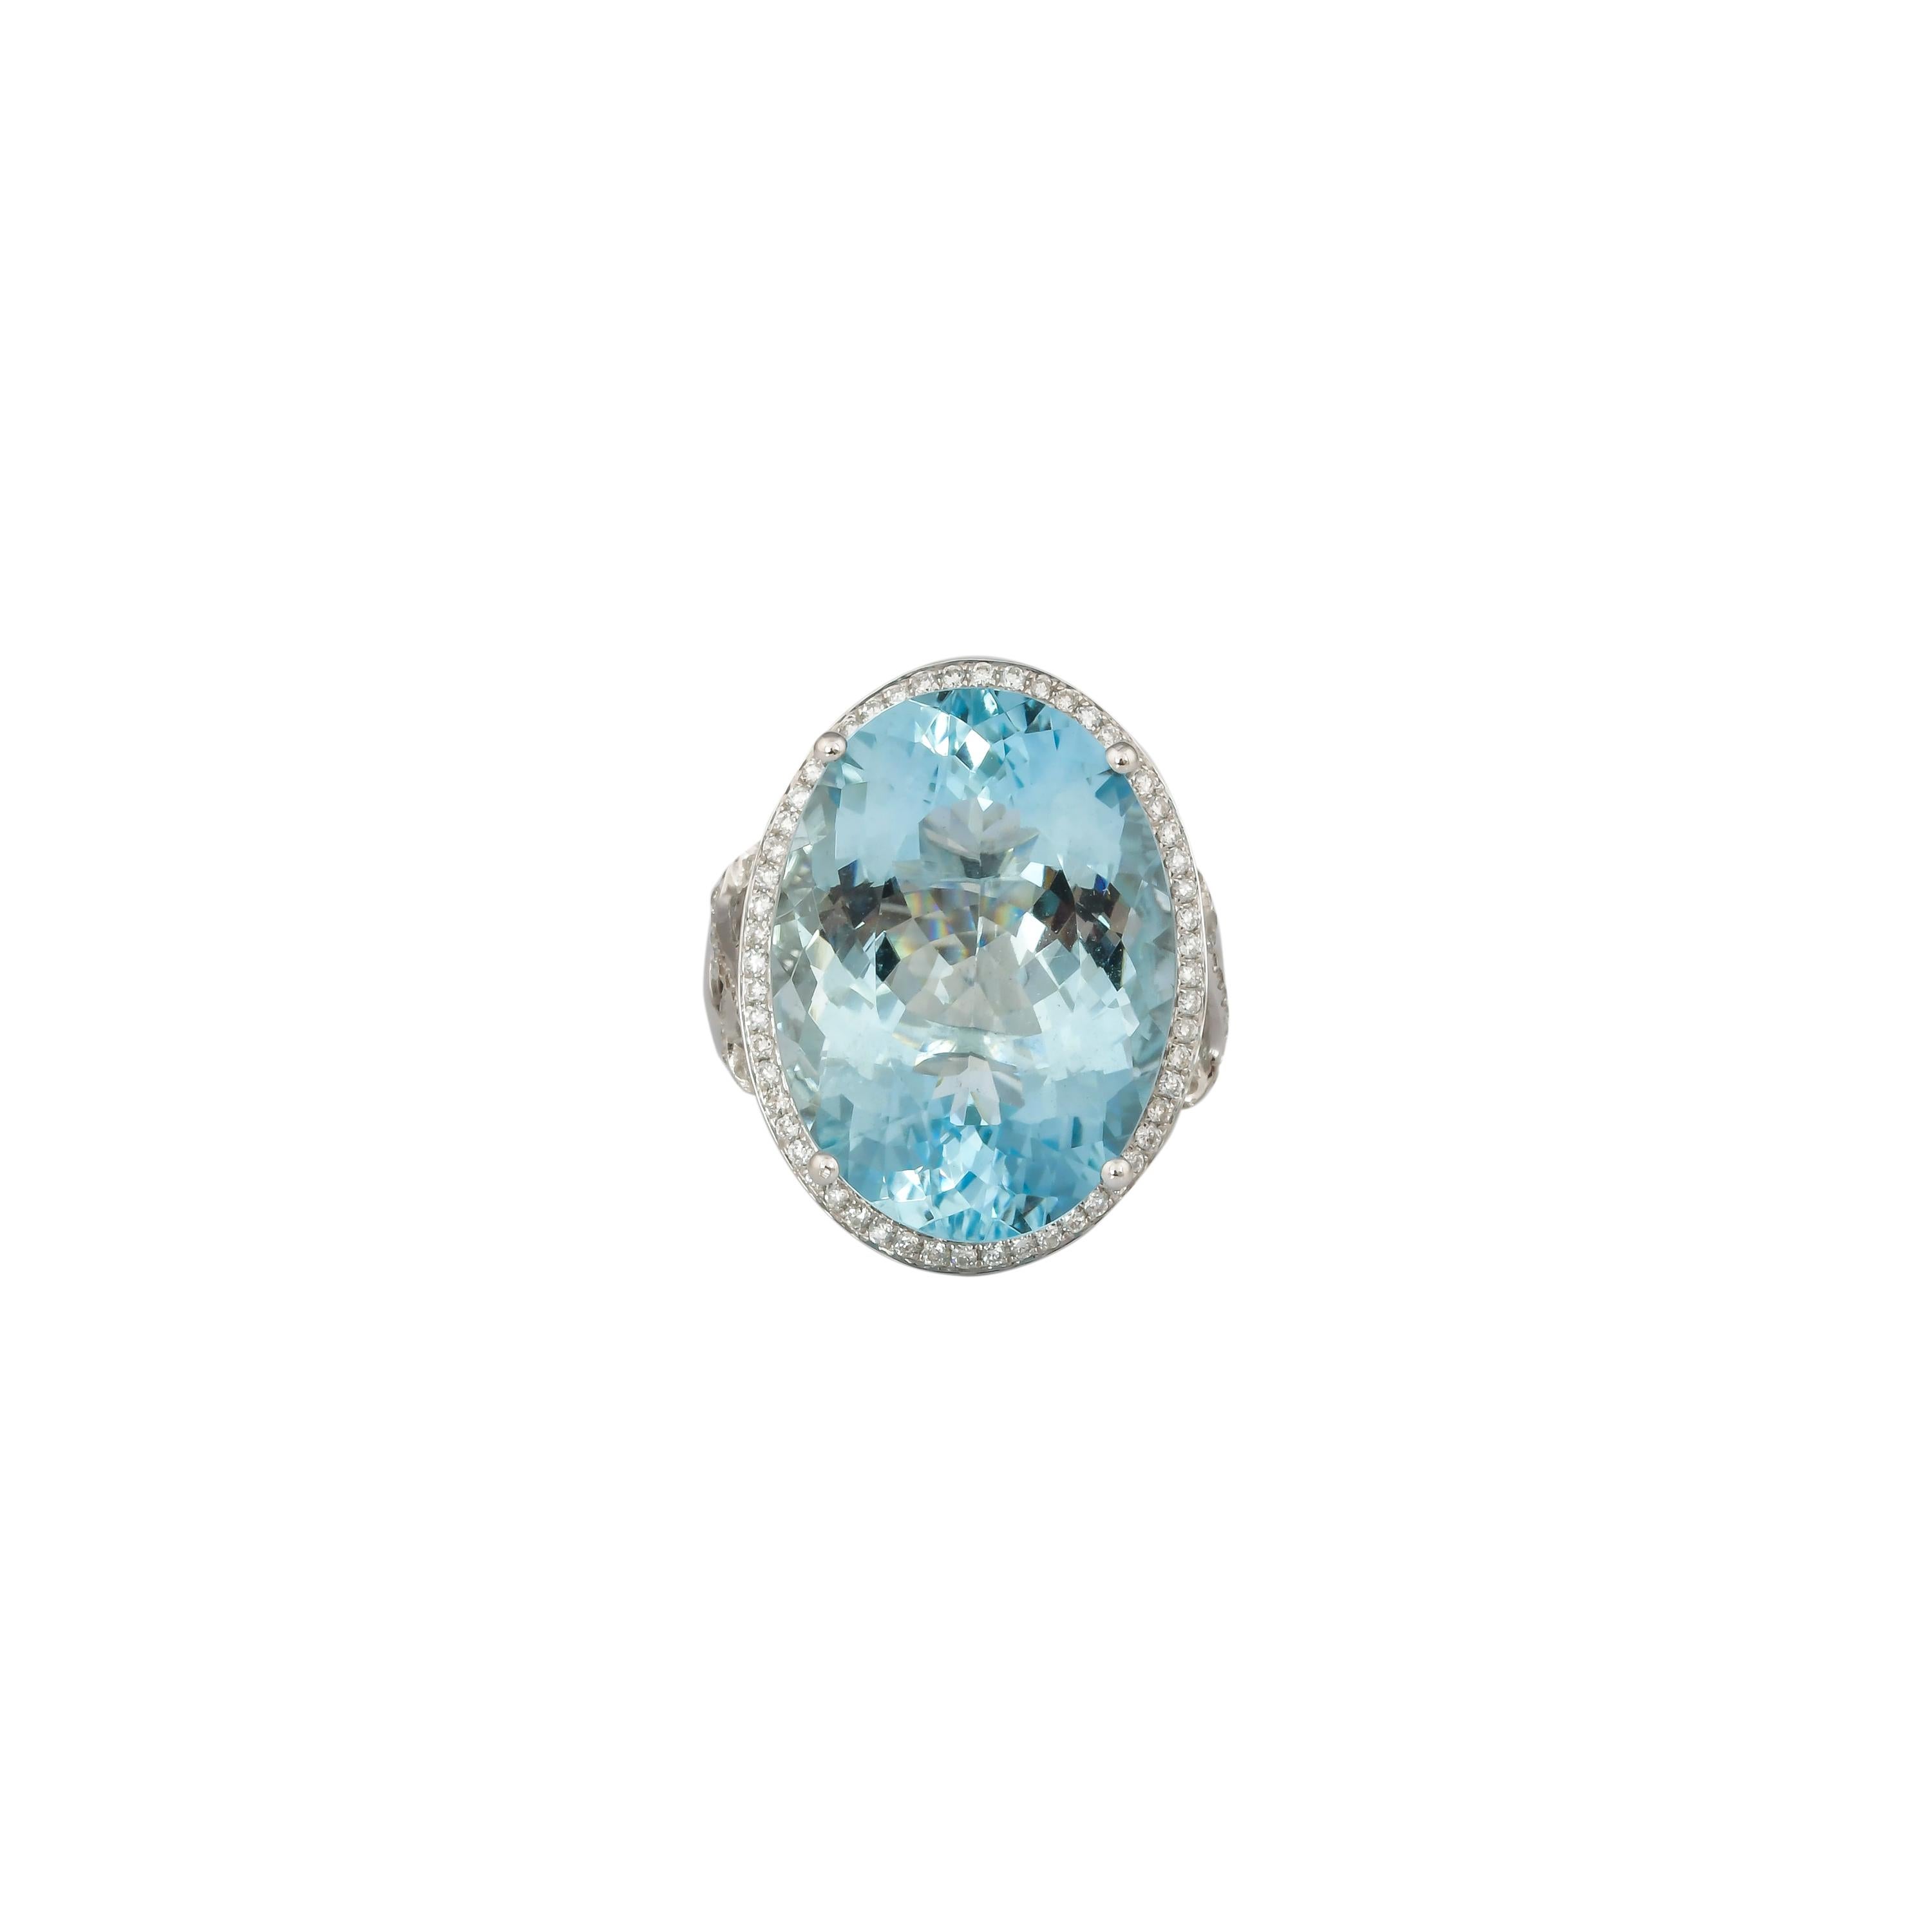 Contemporary 17.5 Carat Aquamarine and Diamond Ring in 18 Karat White Gold For Sale